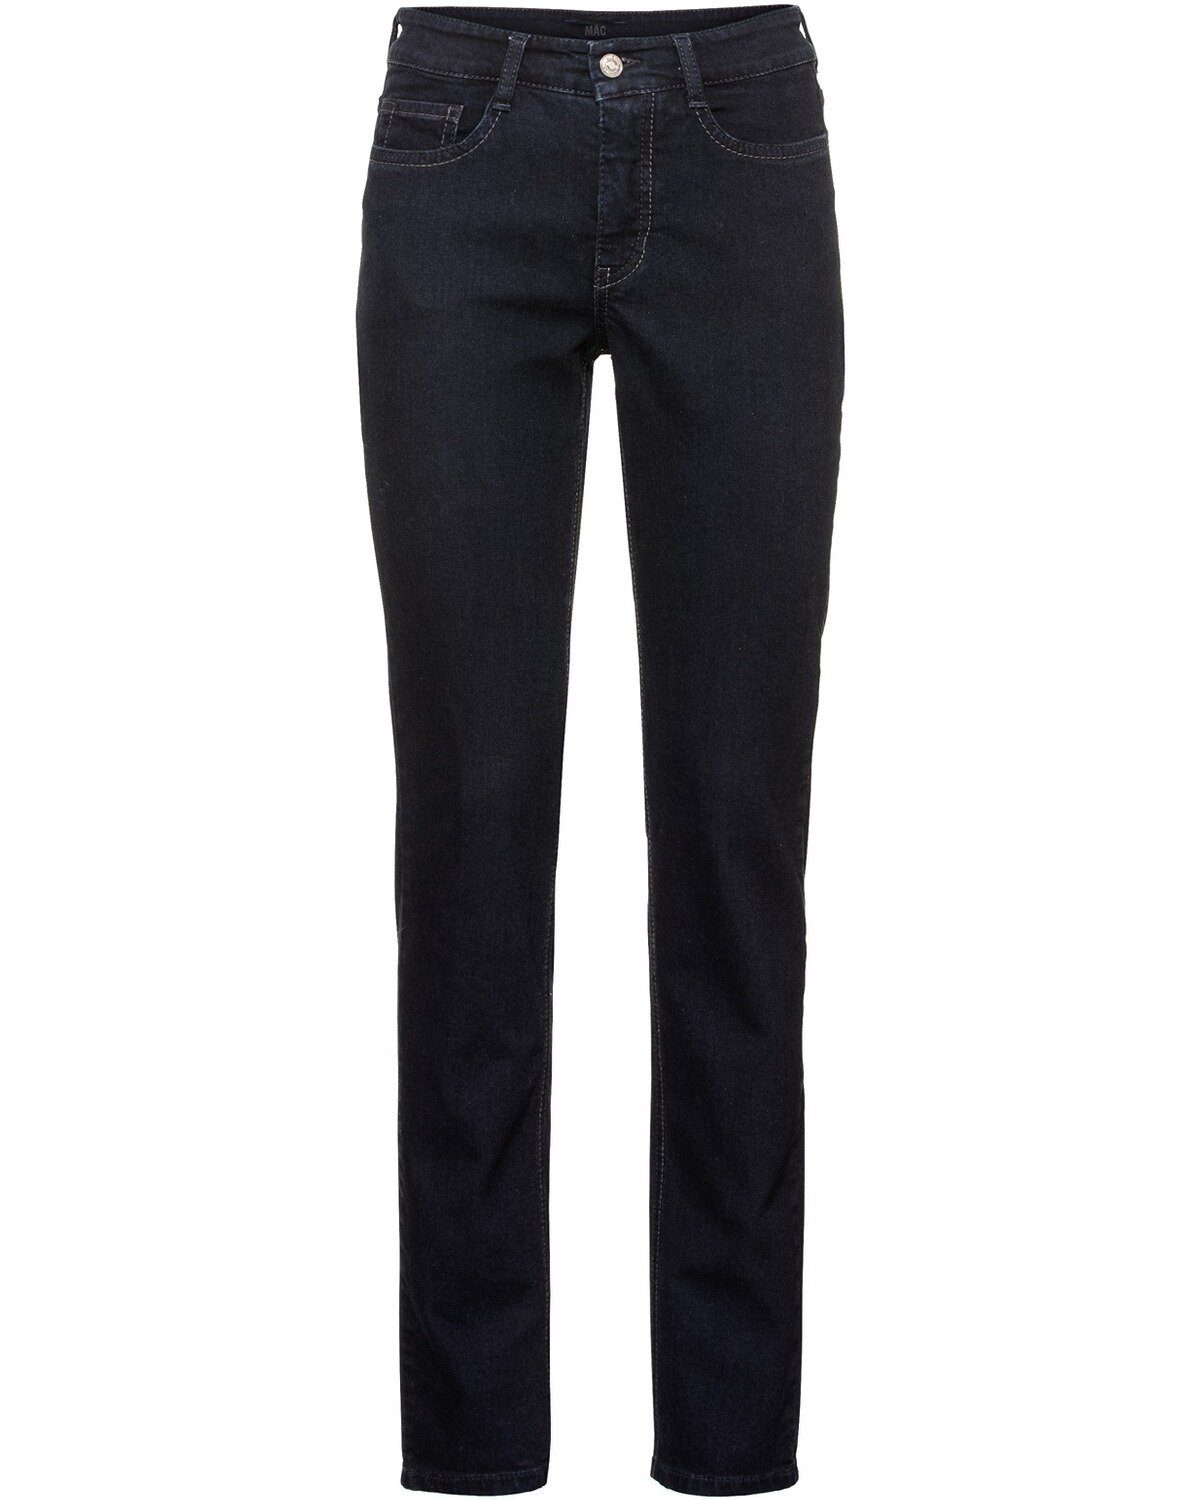 MAC 5-Pocket-Jeans »Jeans Angela Pipe« online kaufen | OTTO